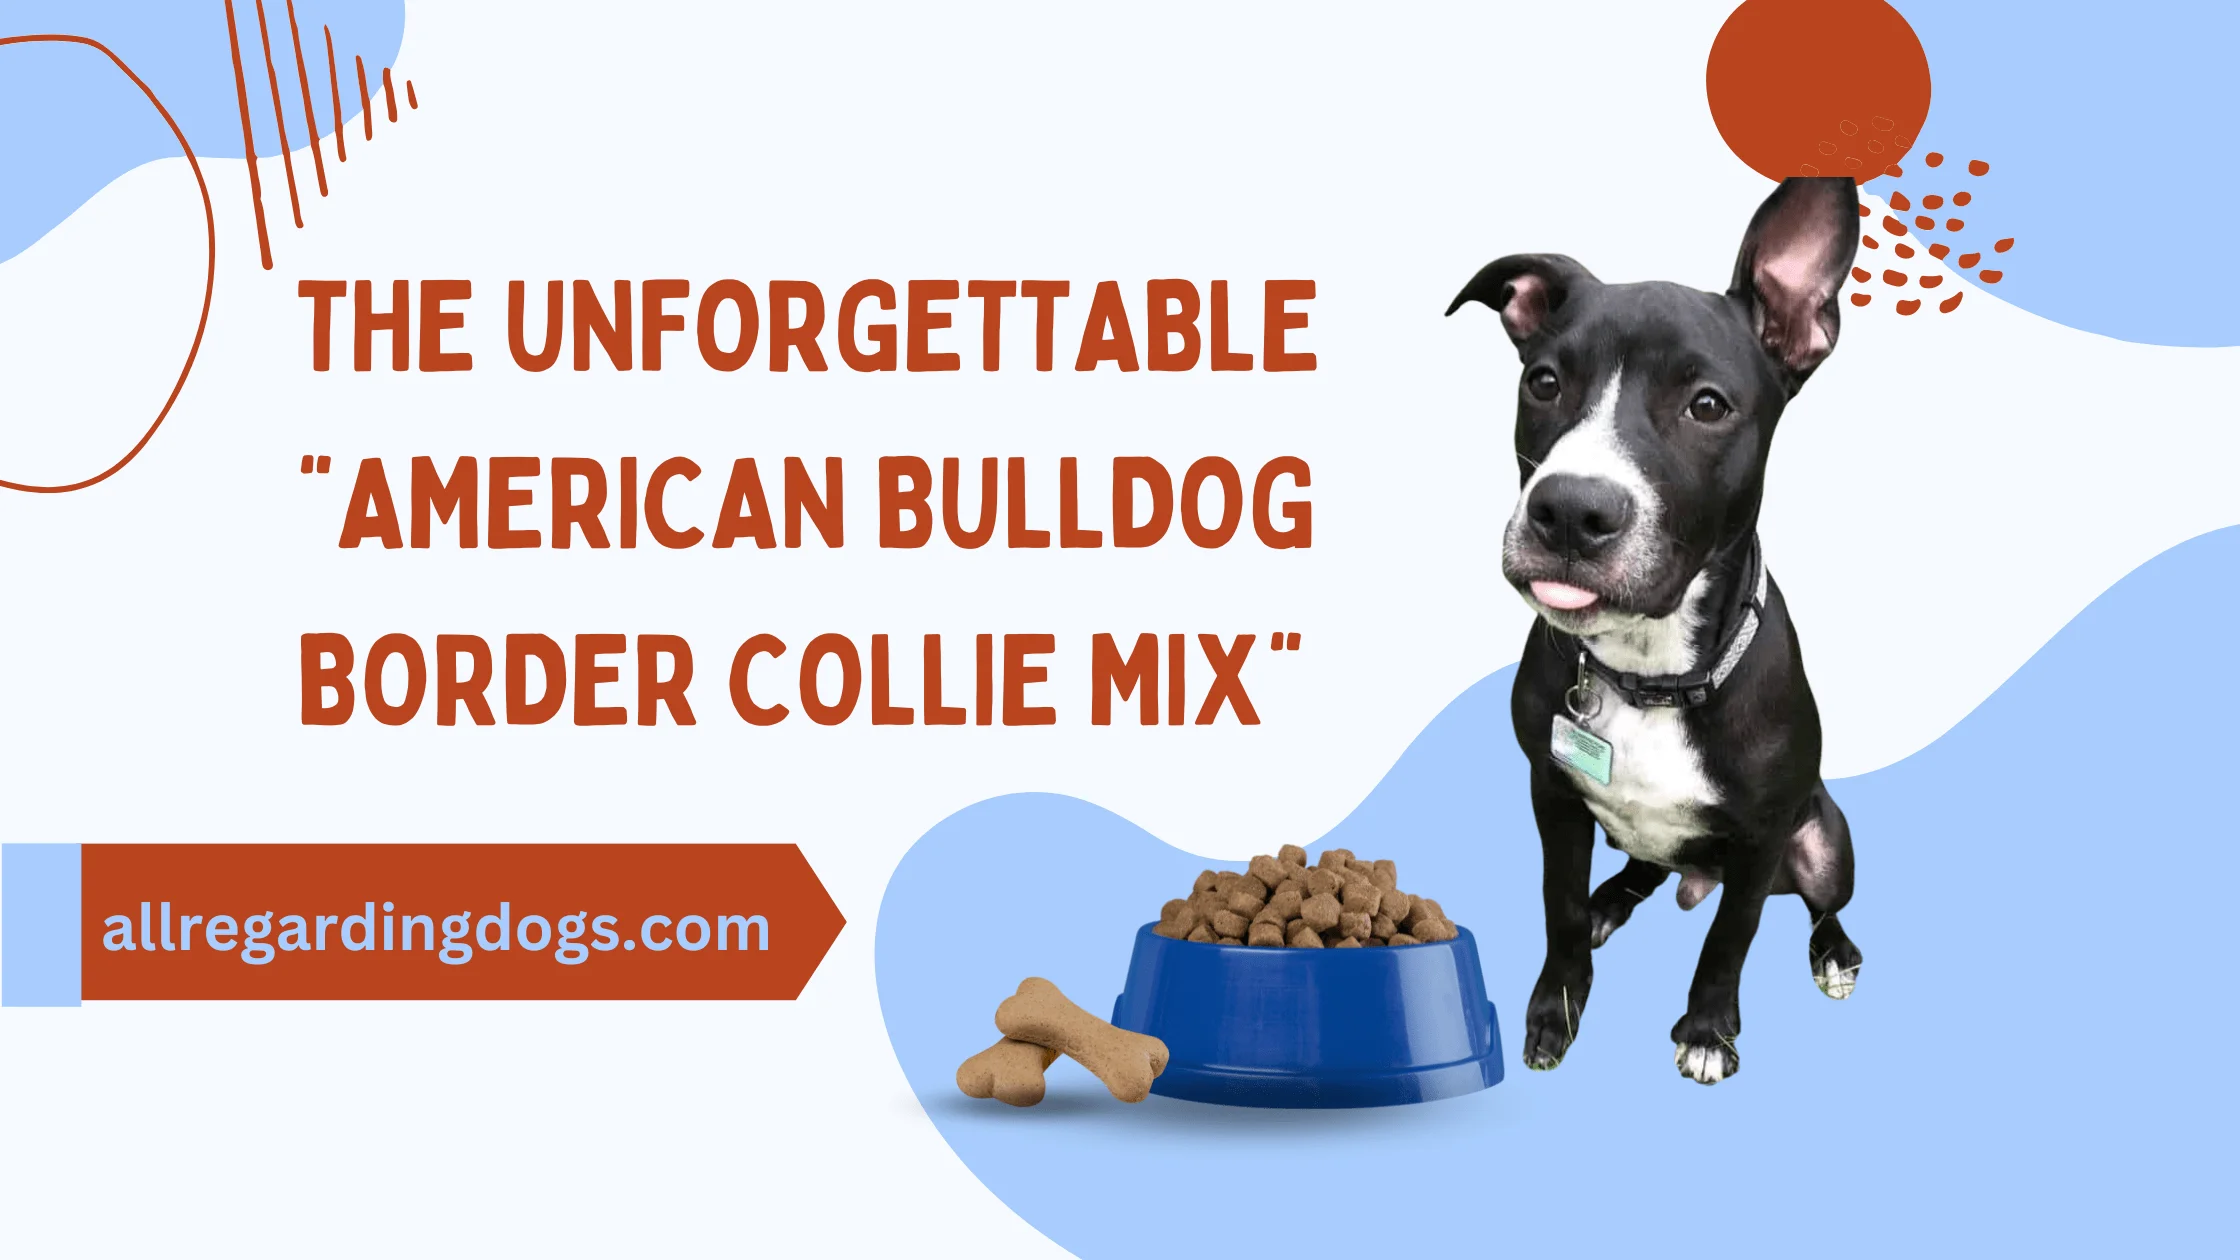 border collie bulldog mix